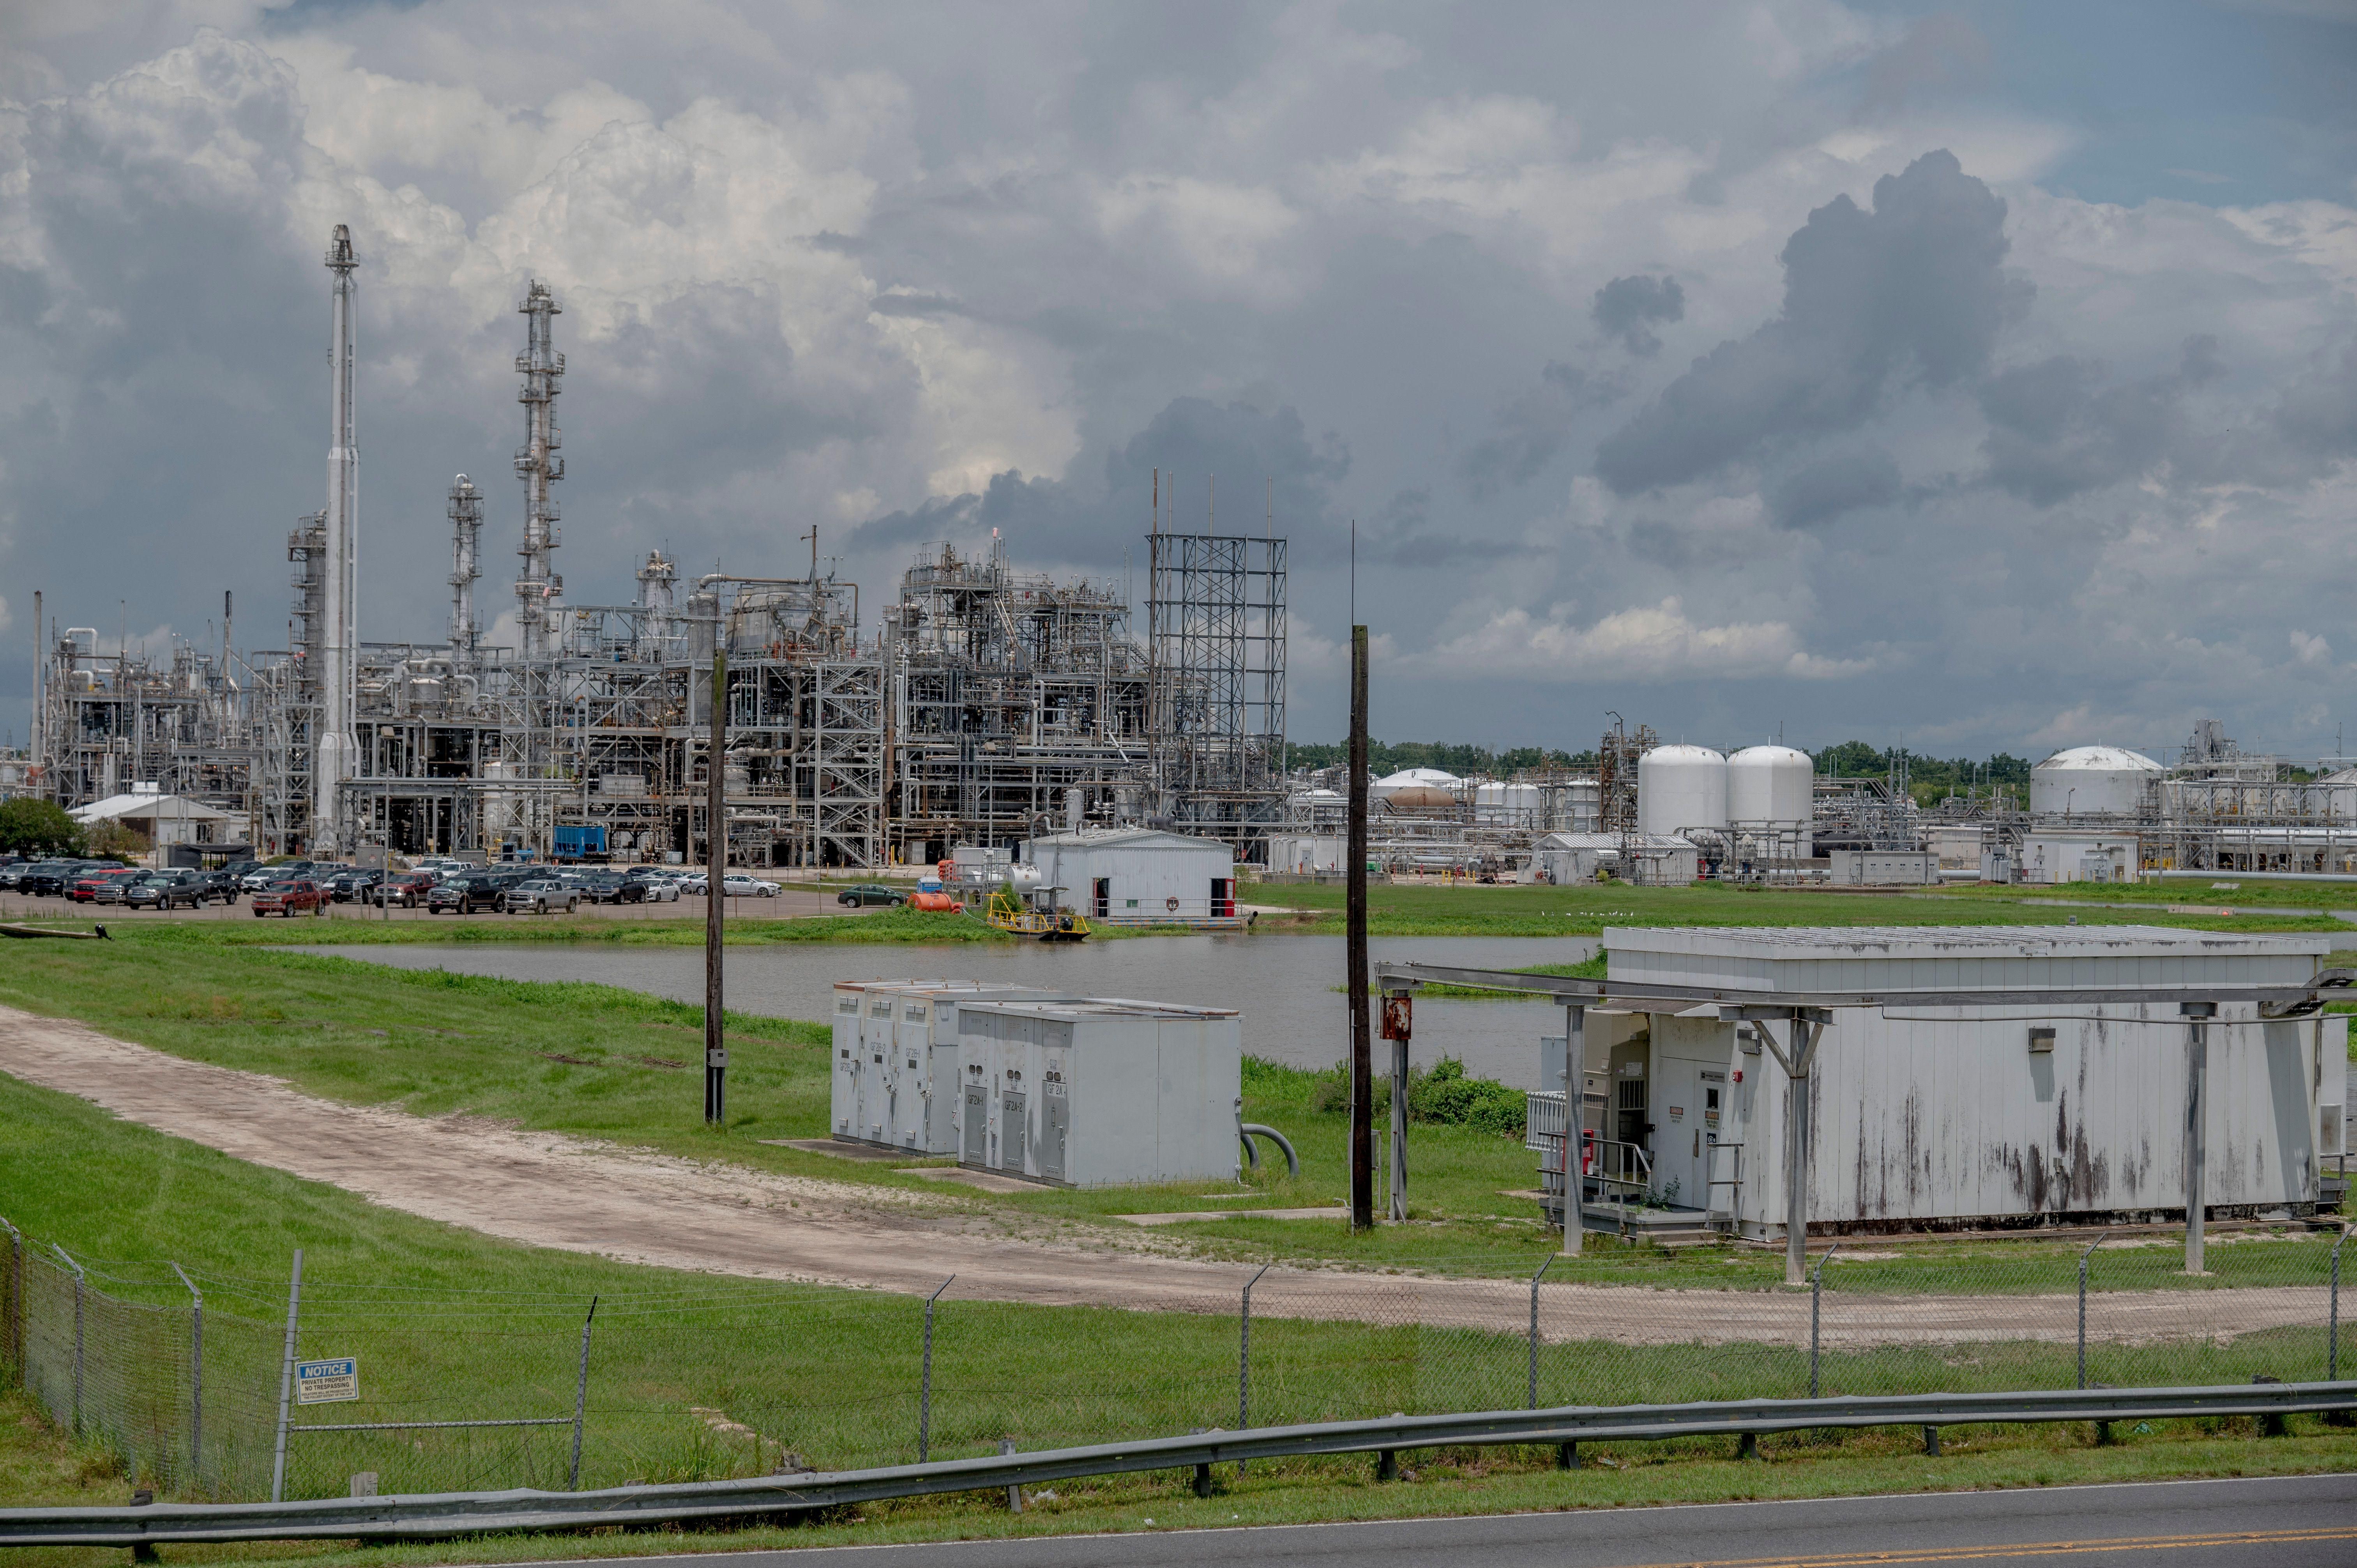 The Denka neoprene production plant emits chloroprene and other hazardous air pollutants in Reserve, Louisiana, on August 12, 2021.